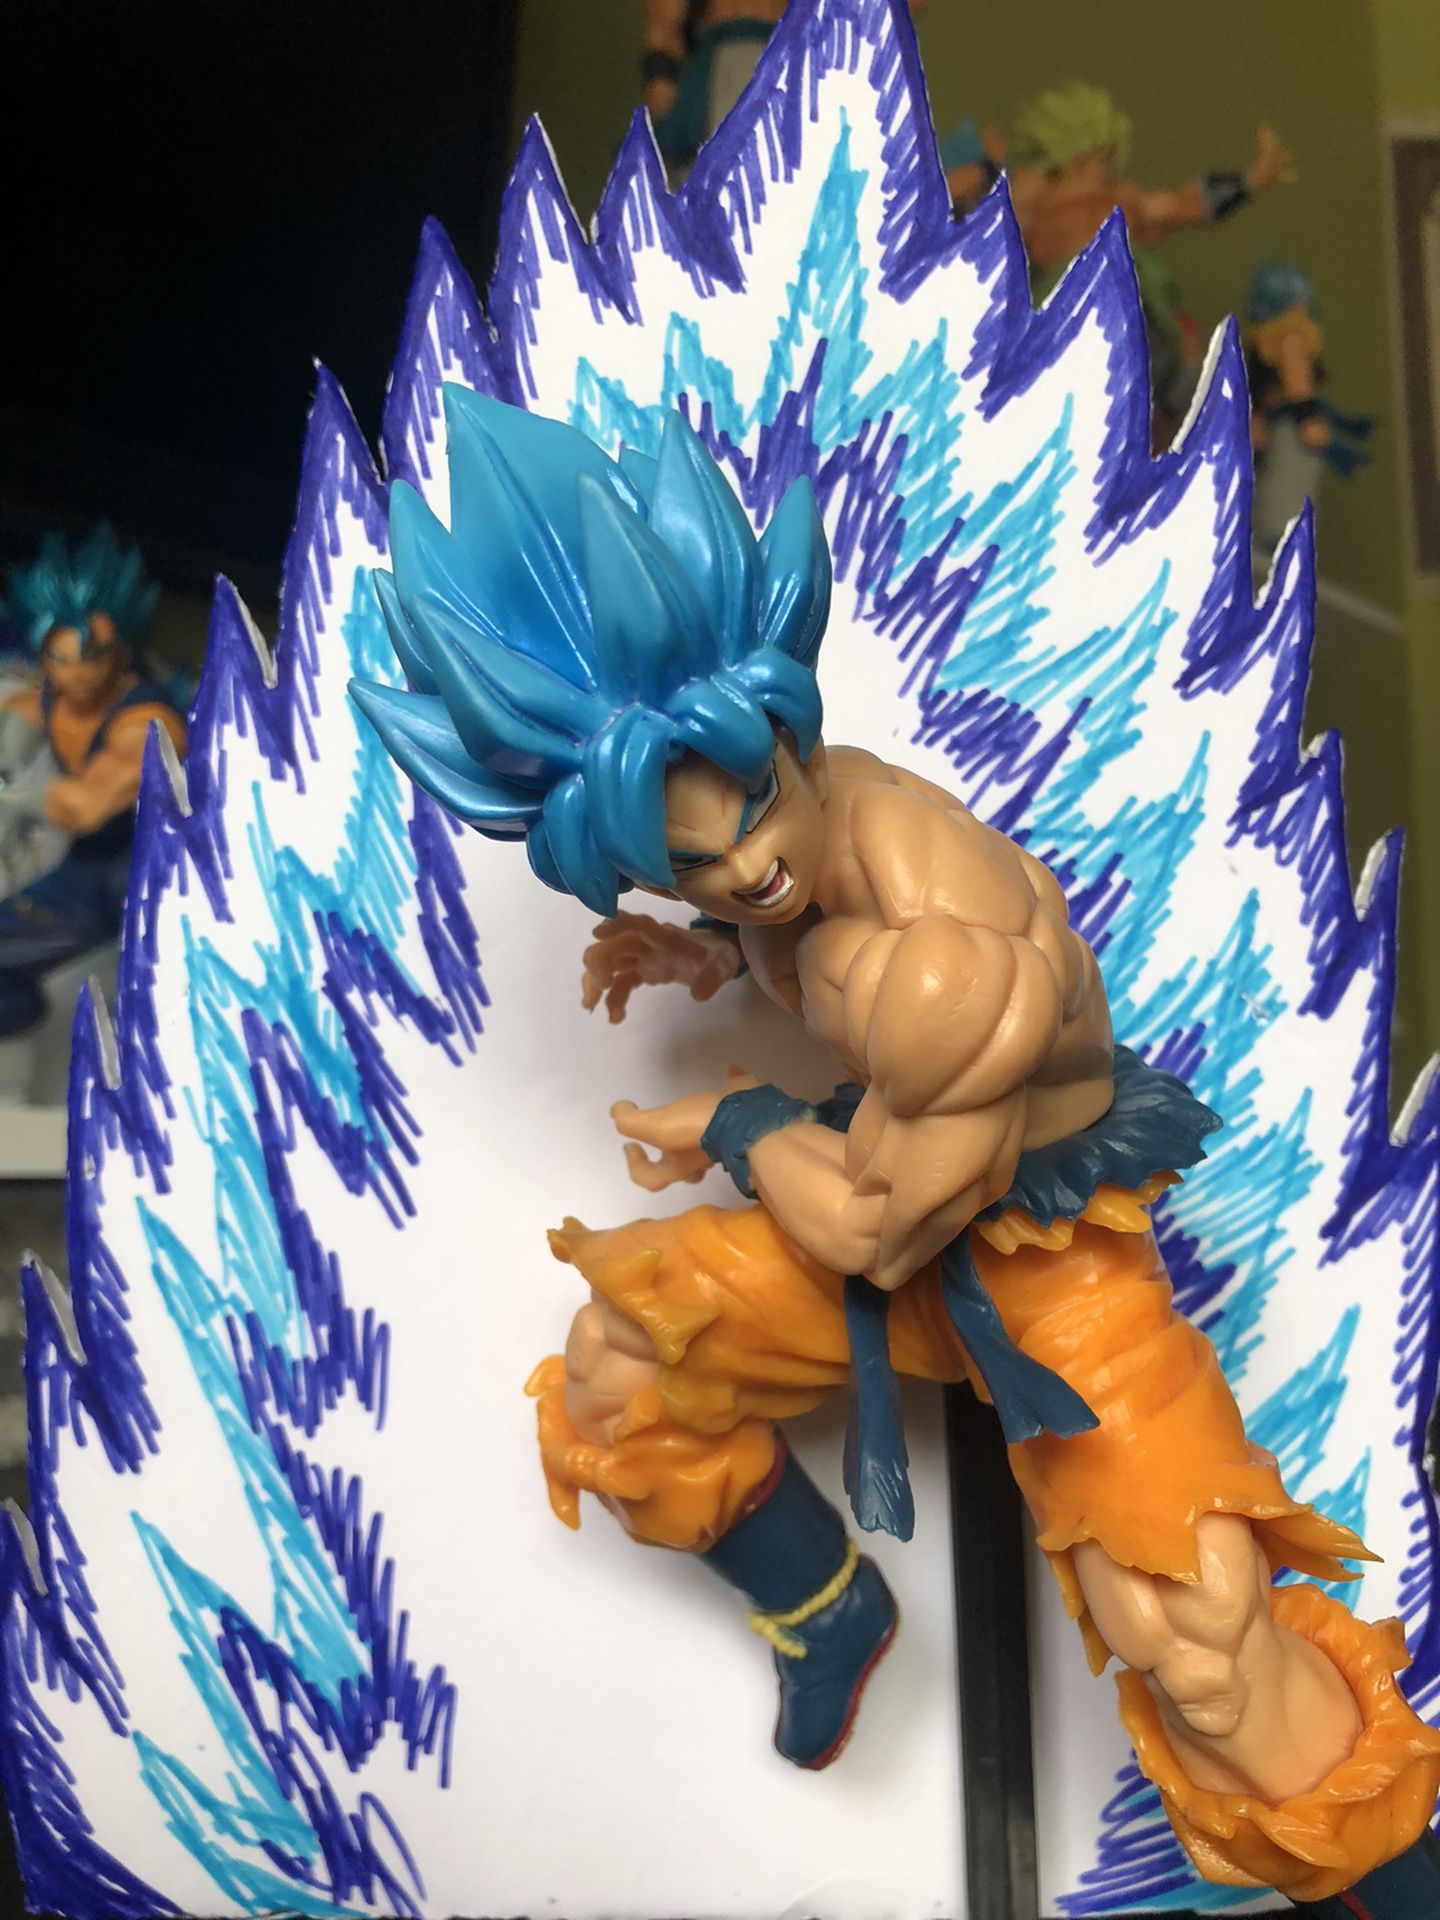 Super Saiyan Blue Goku figure